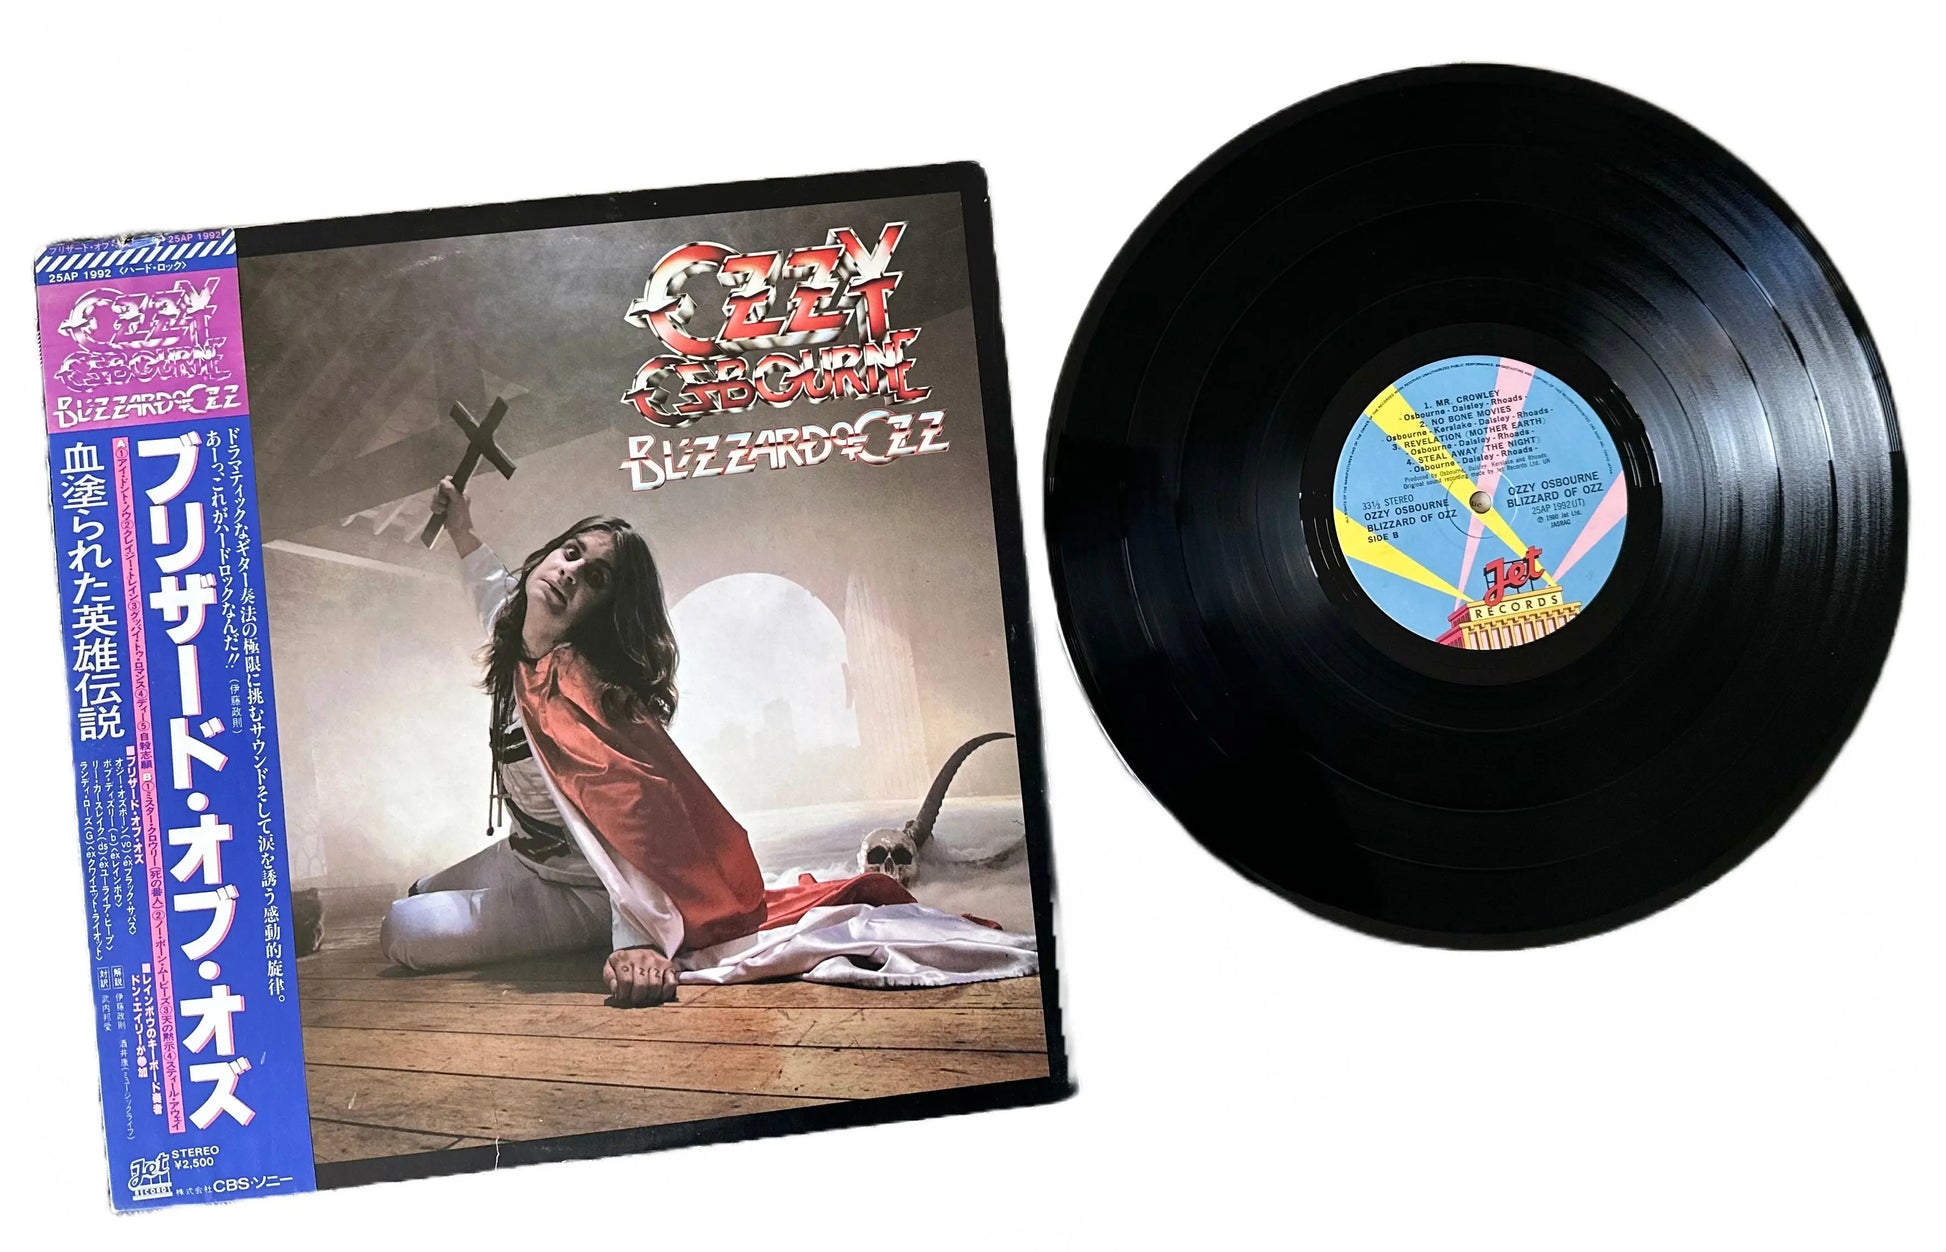 Ozzy Osbourne - Blizzard of Ozz [Original Japanese Vinyl LP Pressing]